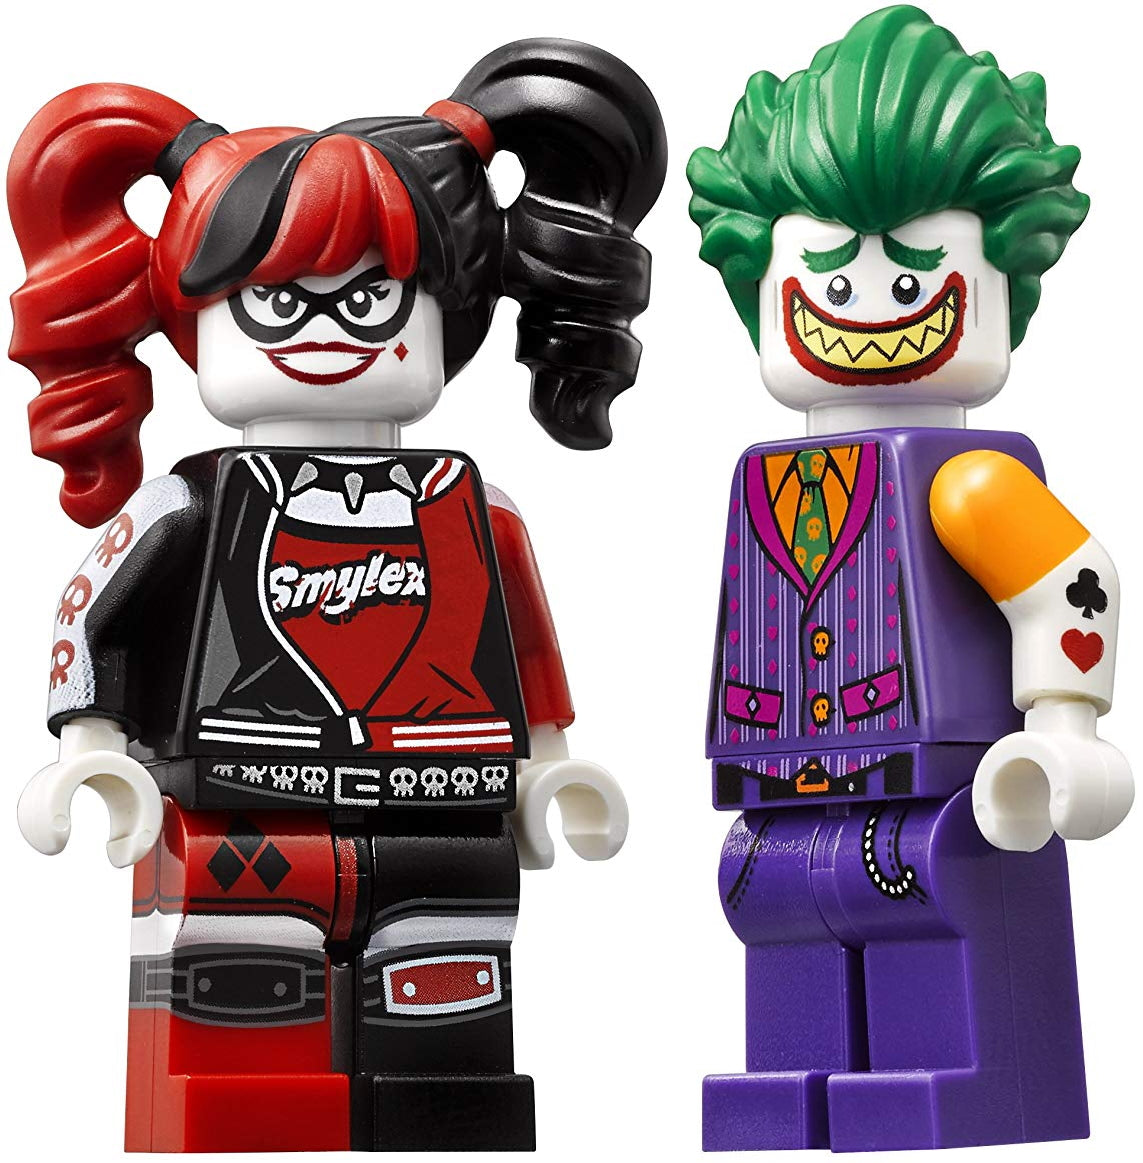 LEGO The Batman Movie: Joker Notorious Lowrider Building Set - 70906